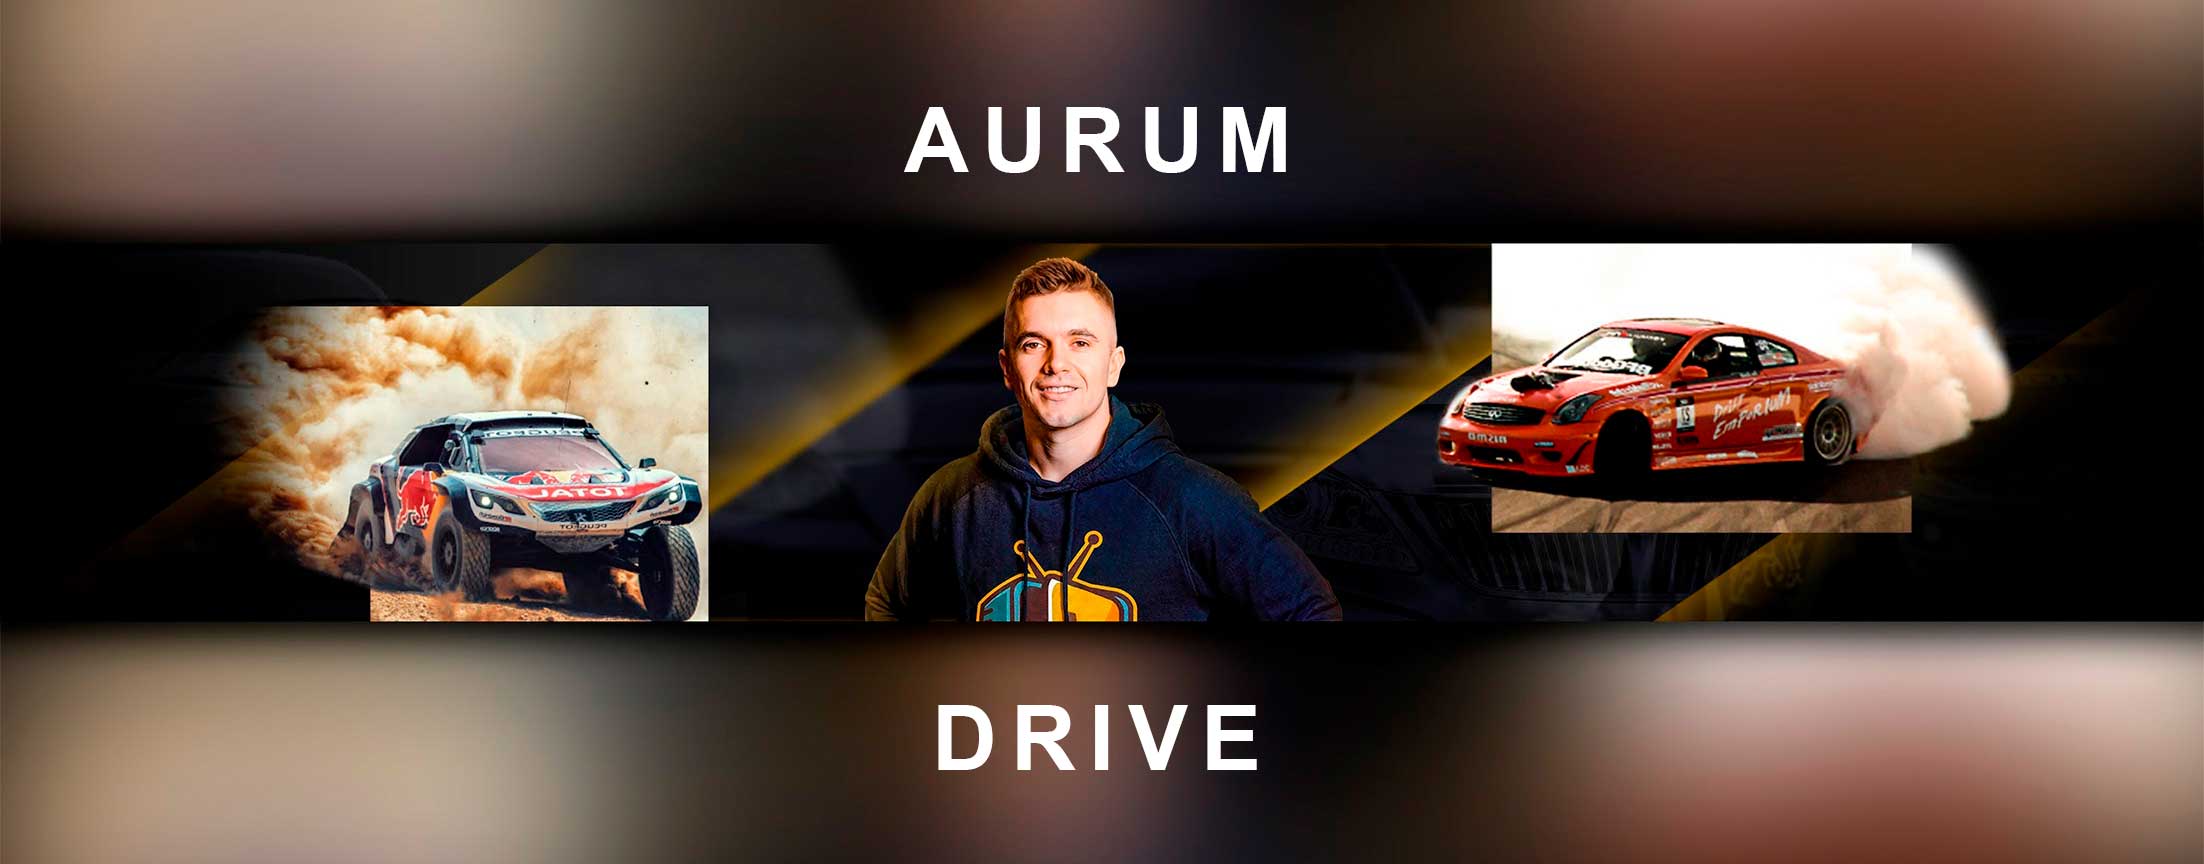 Aurum Drive